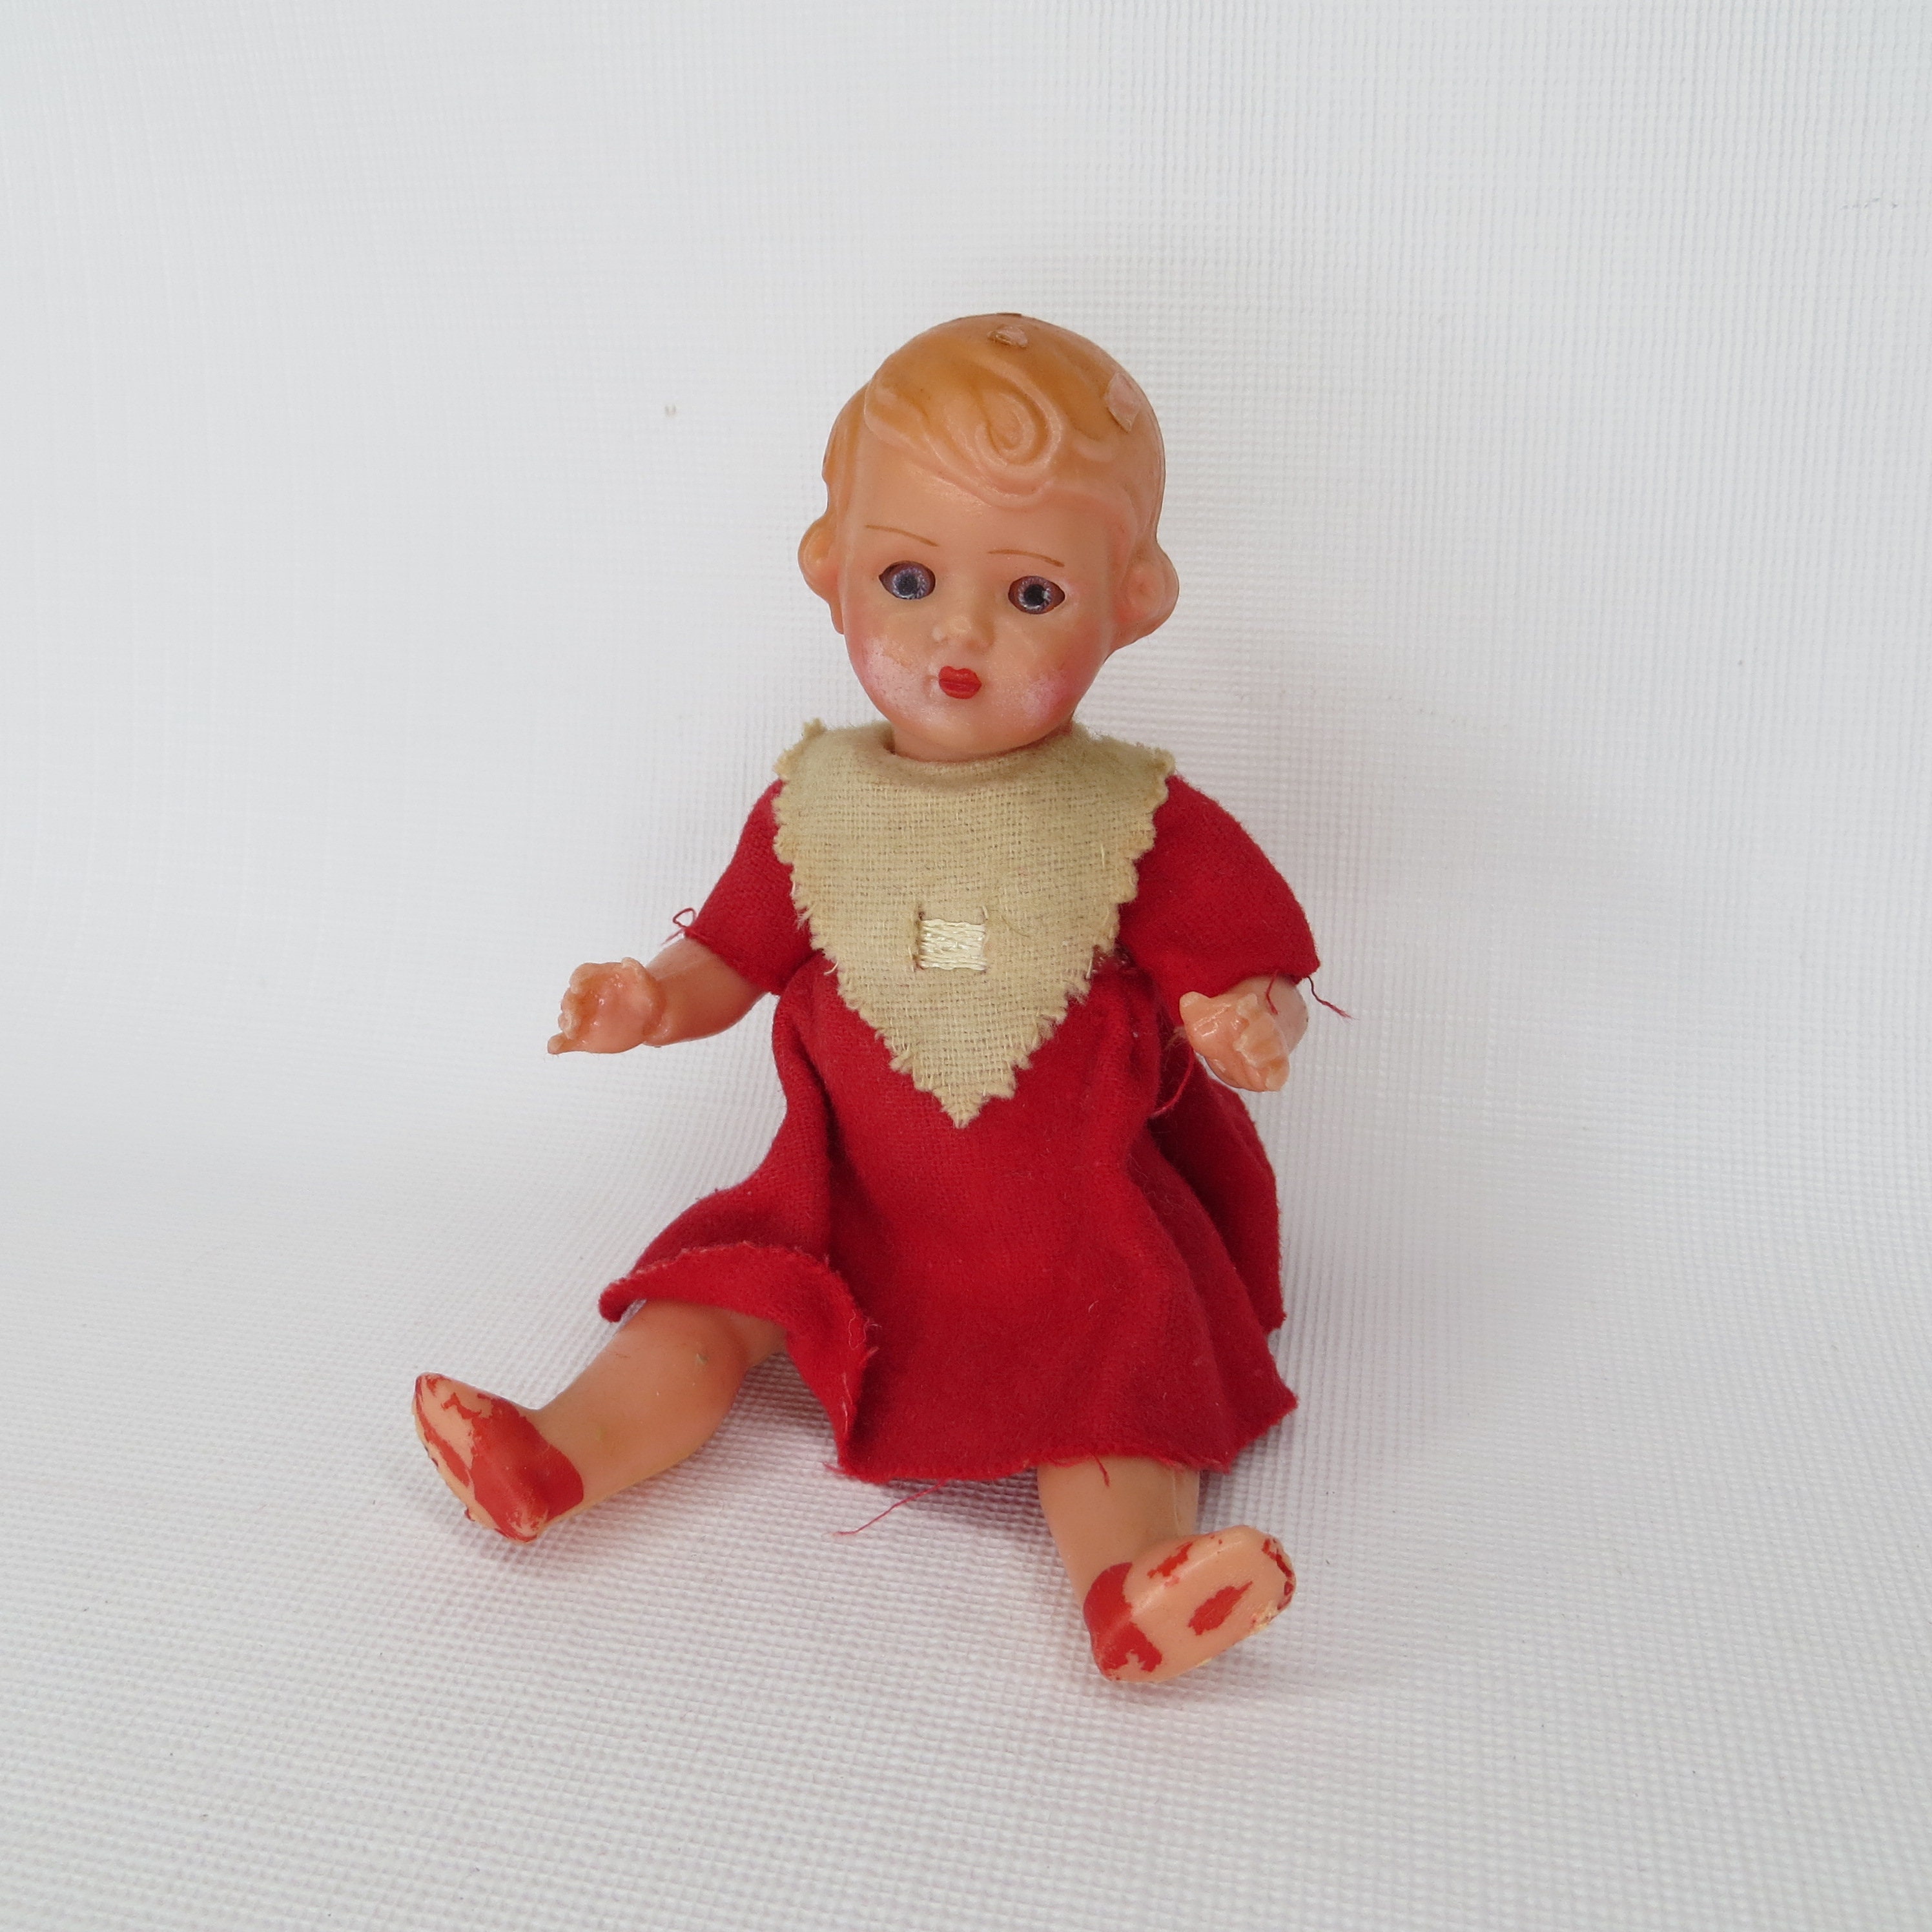 MINIATURE ASIAN BABY Person Plastic Figures Figurines Diorama